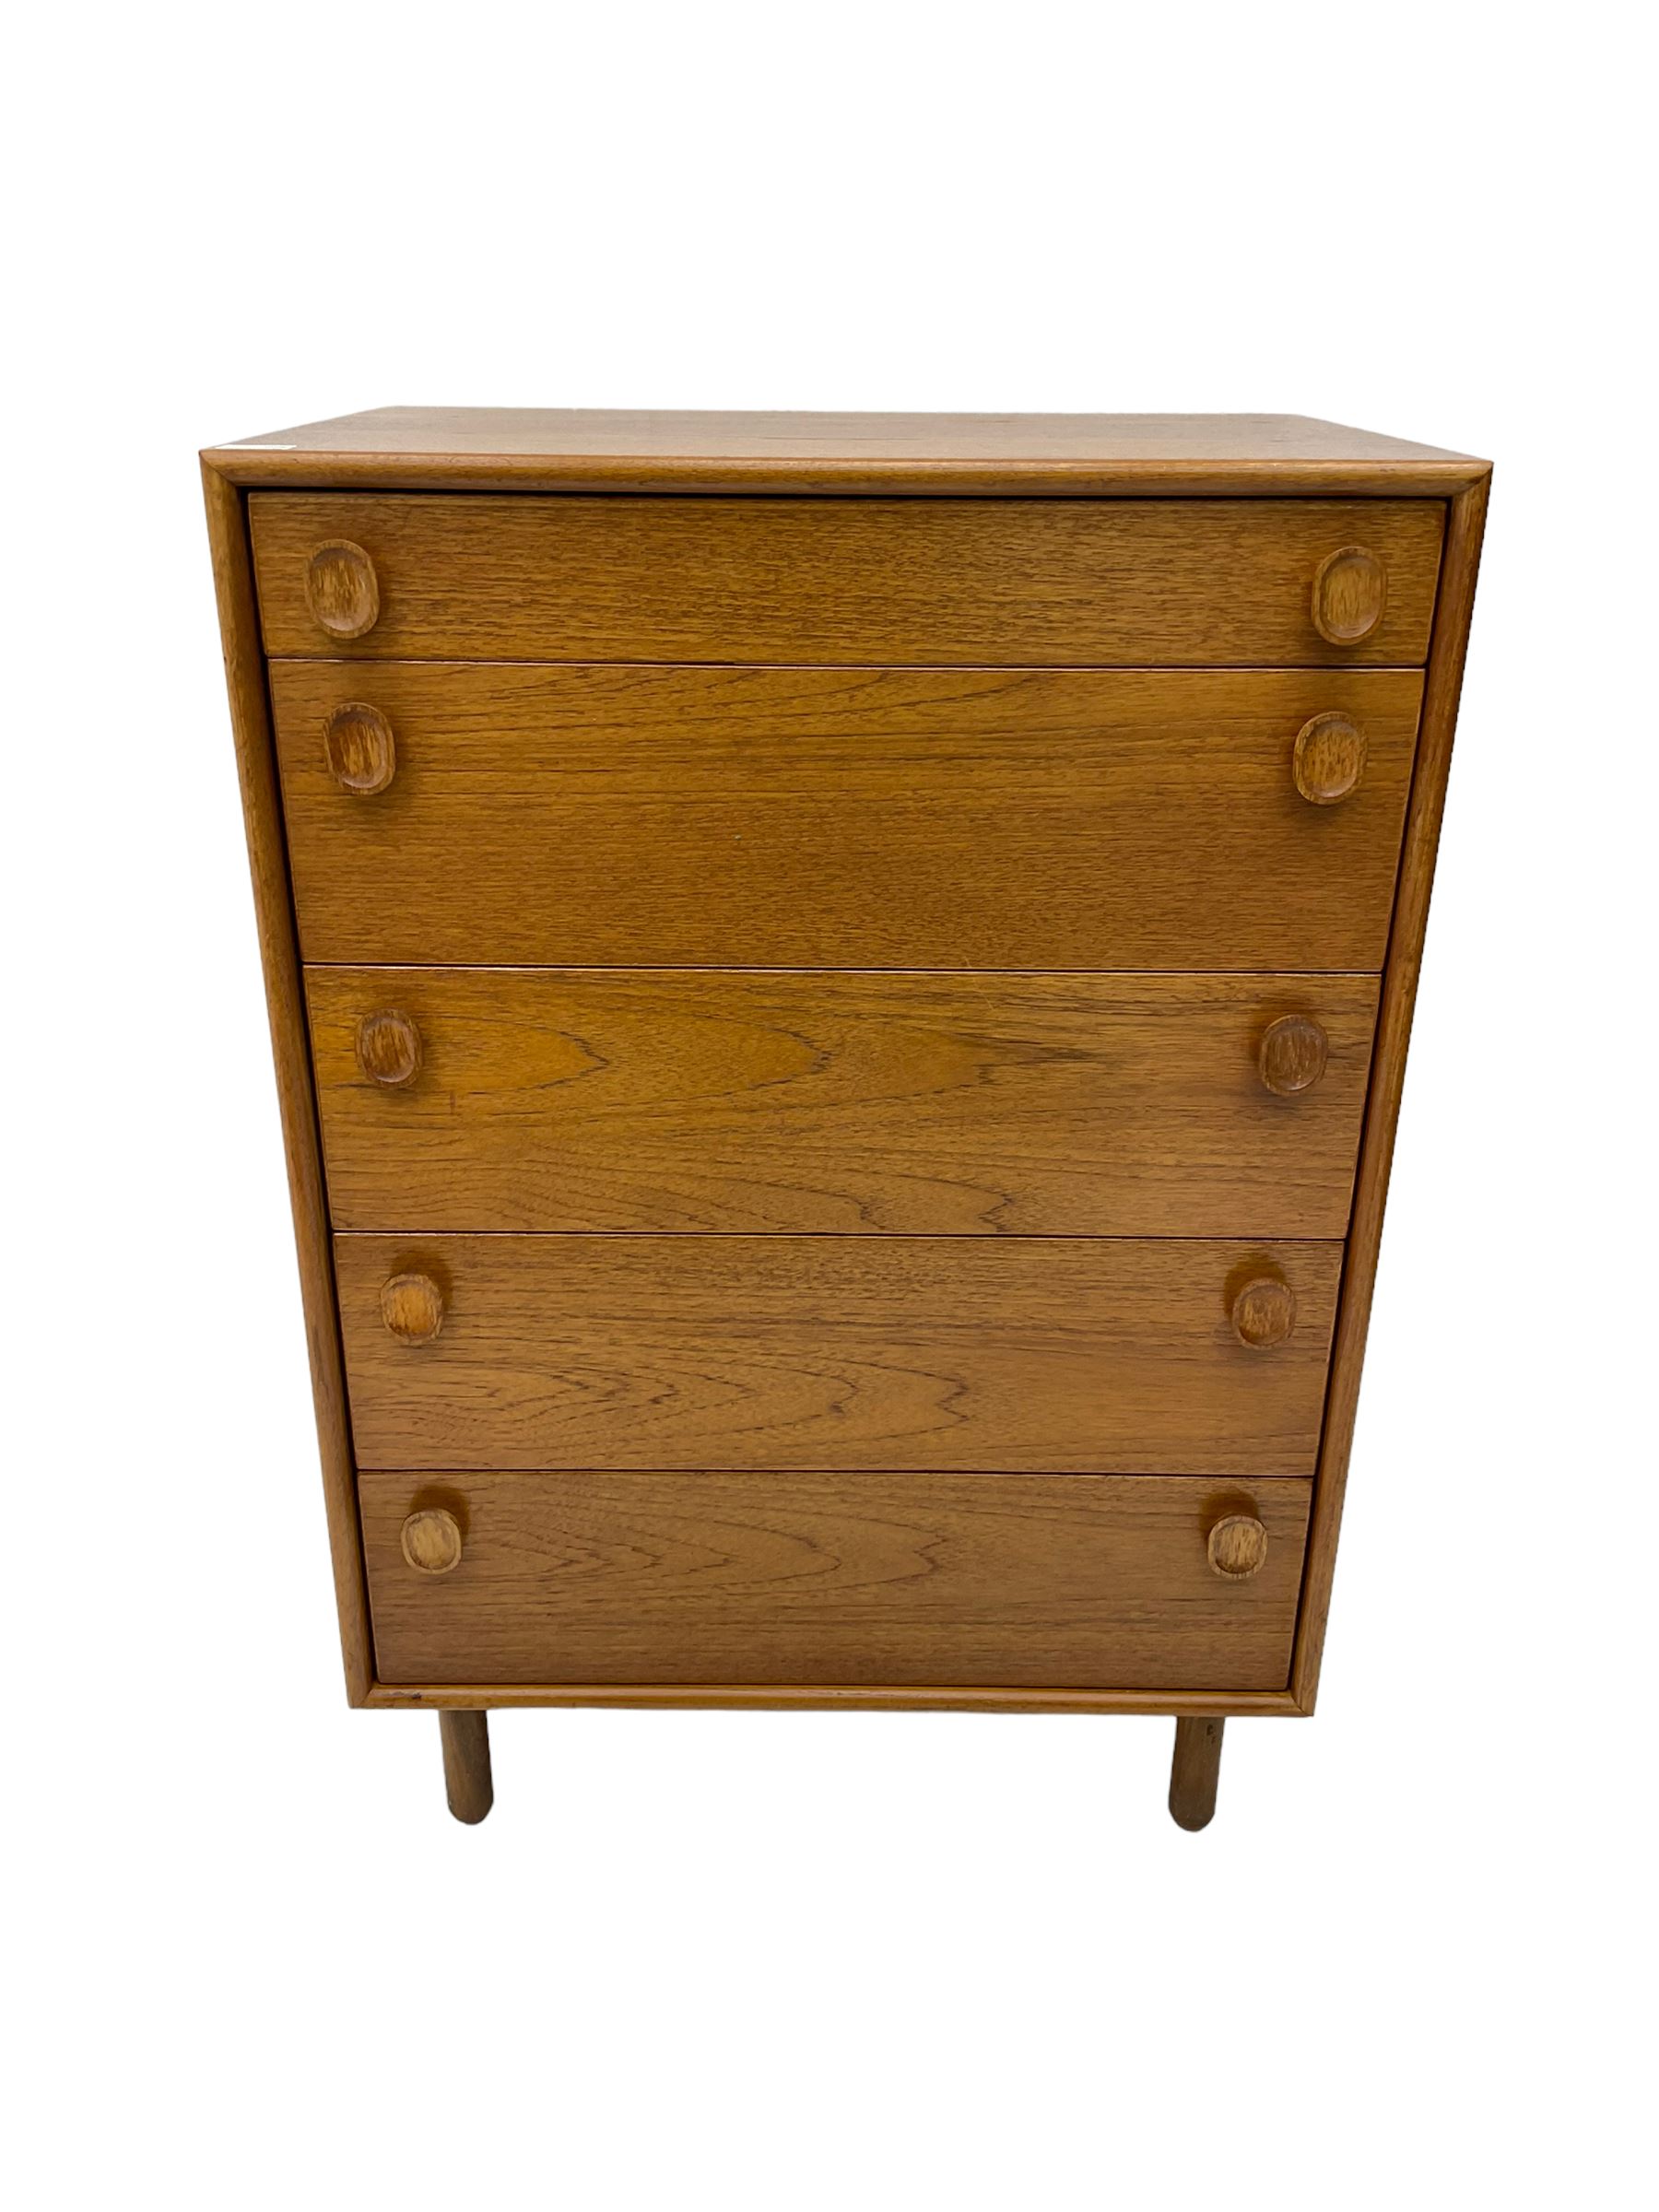 Meredew - mid-20th century teak chest of drawers